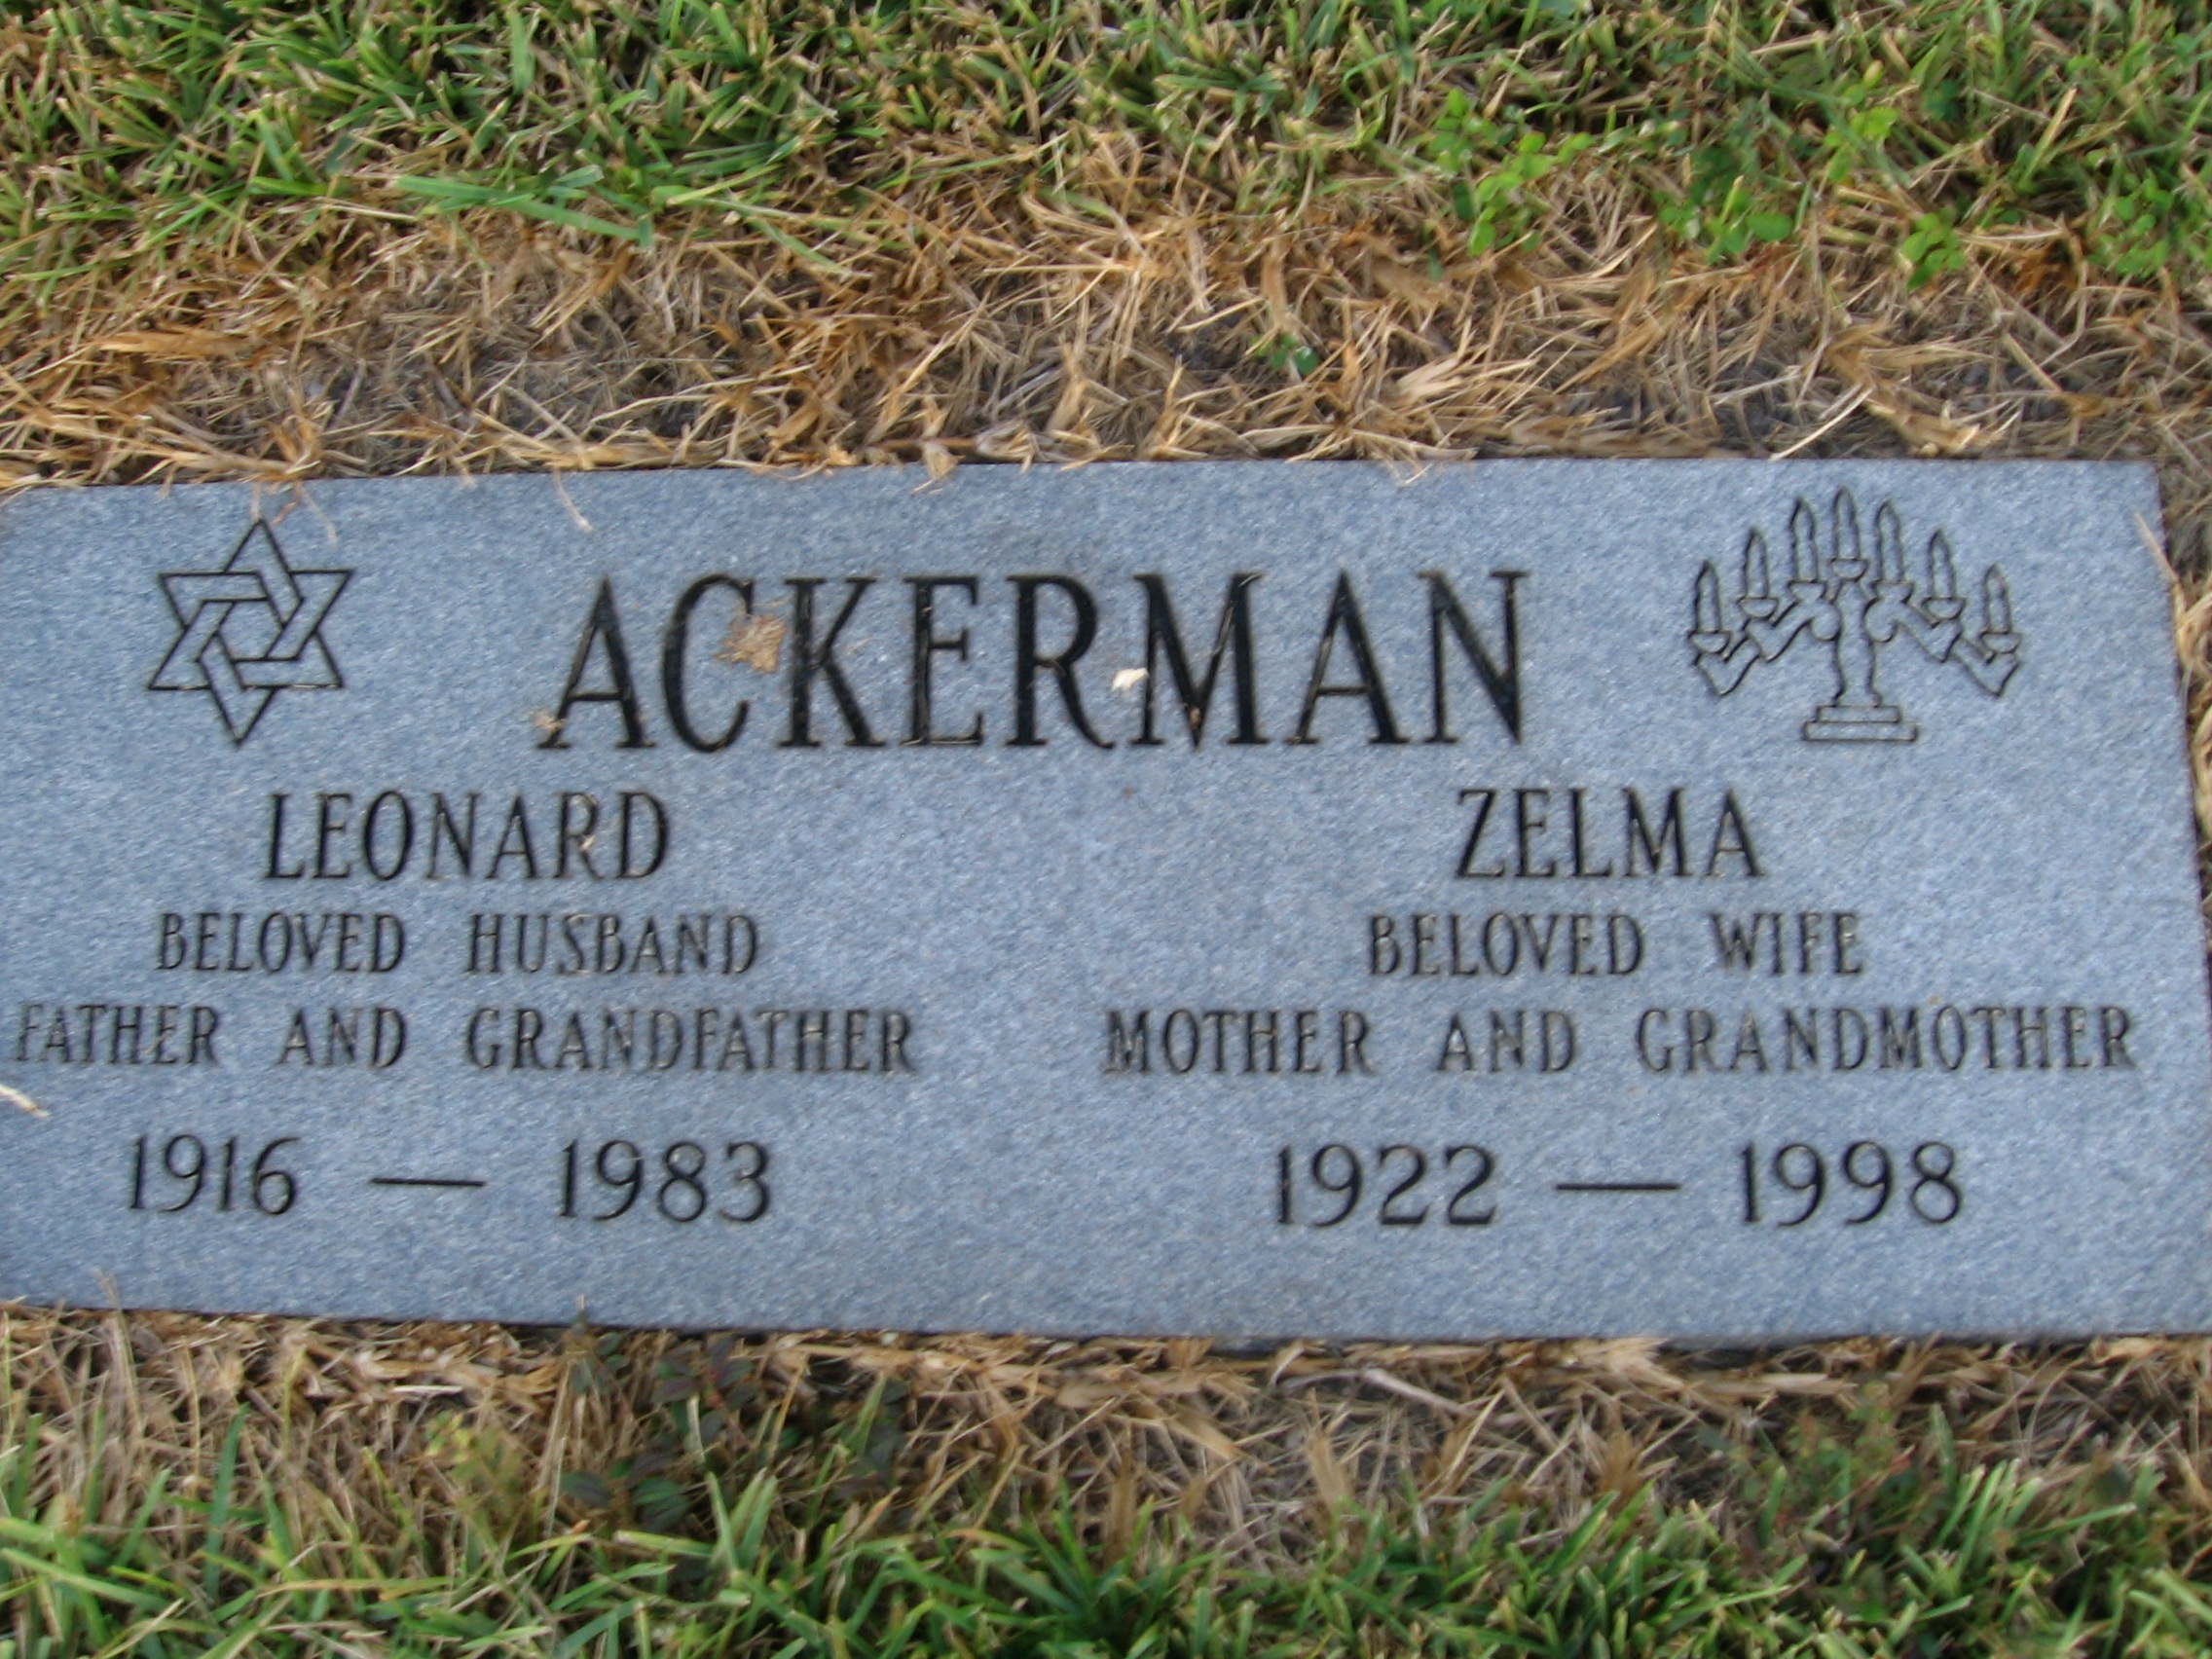 Leonard Ackerman